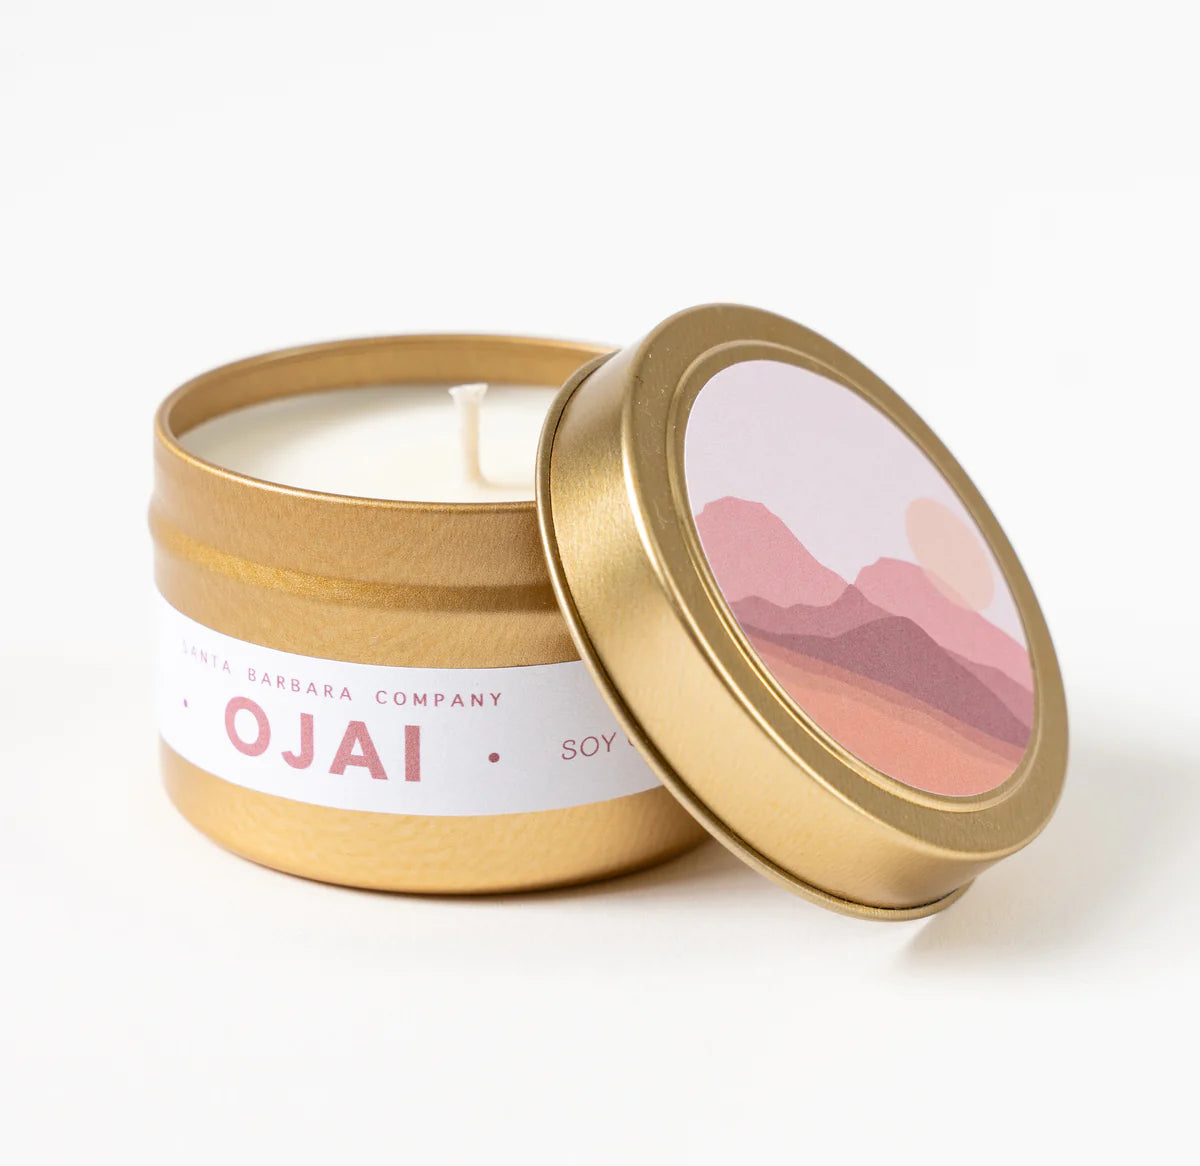 Ojai travel candle in gold tin